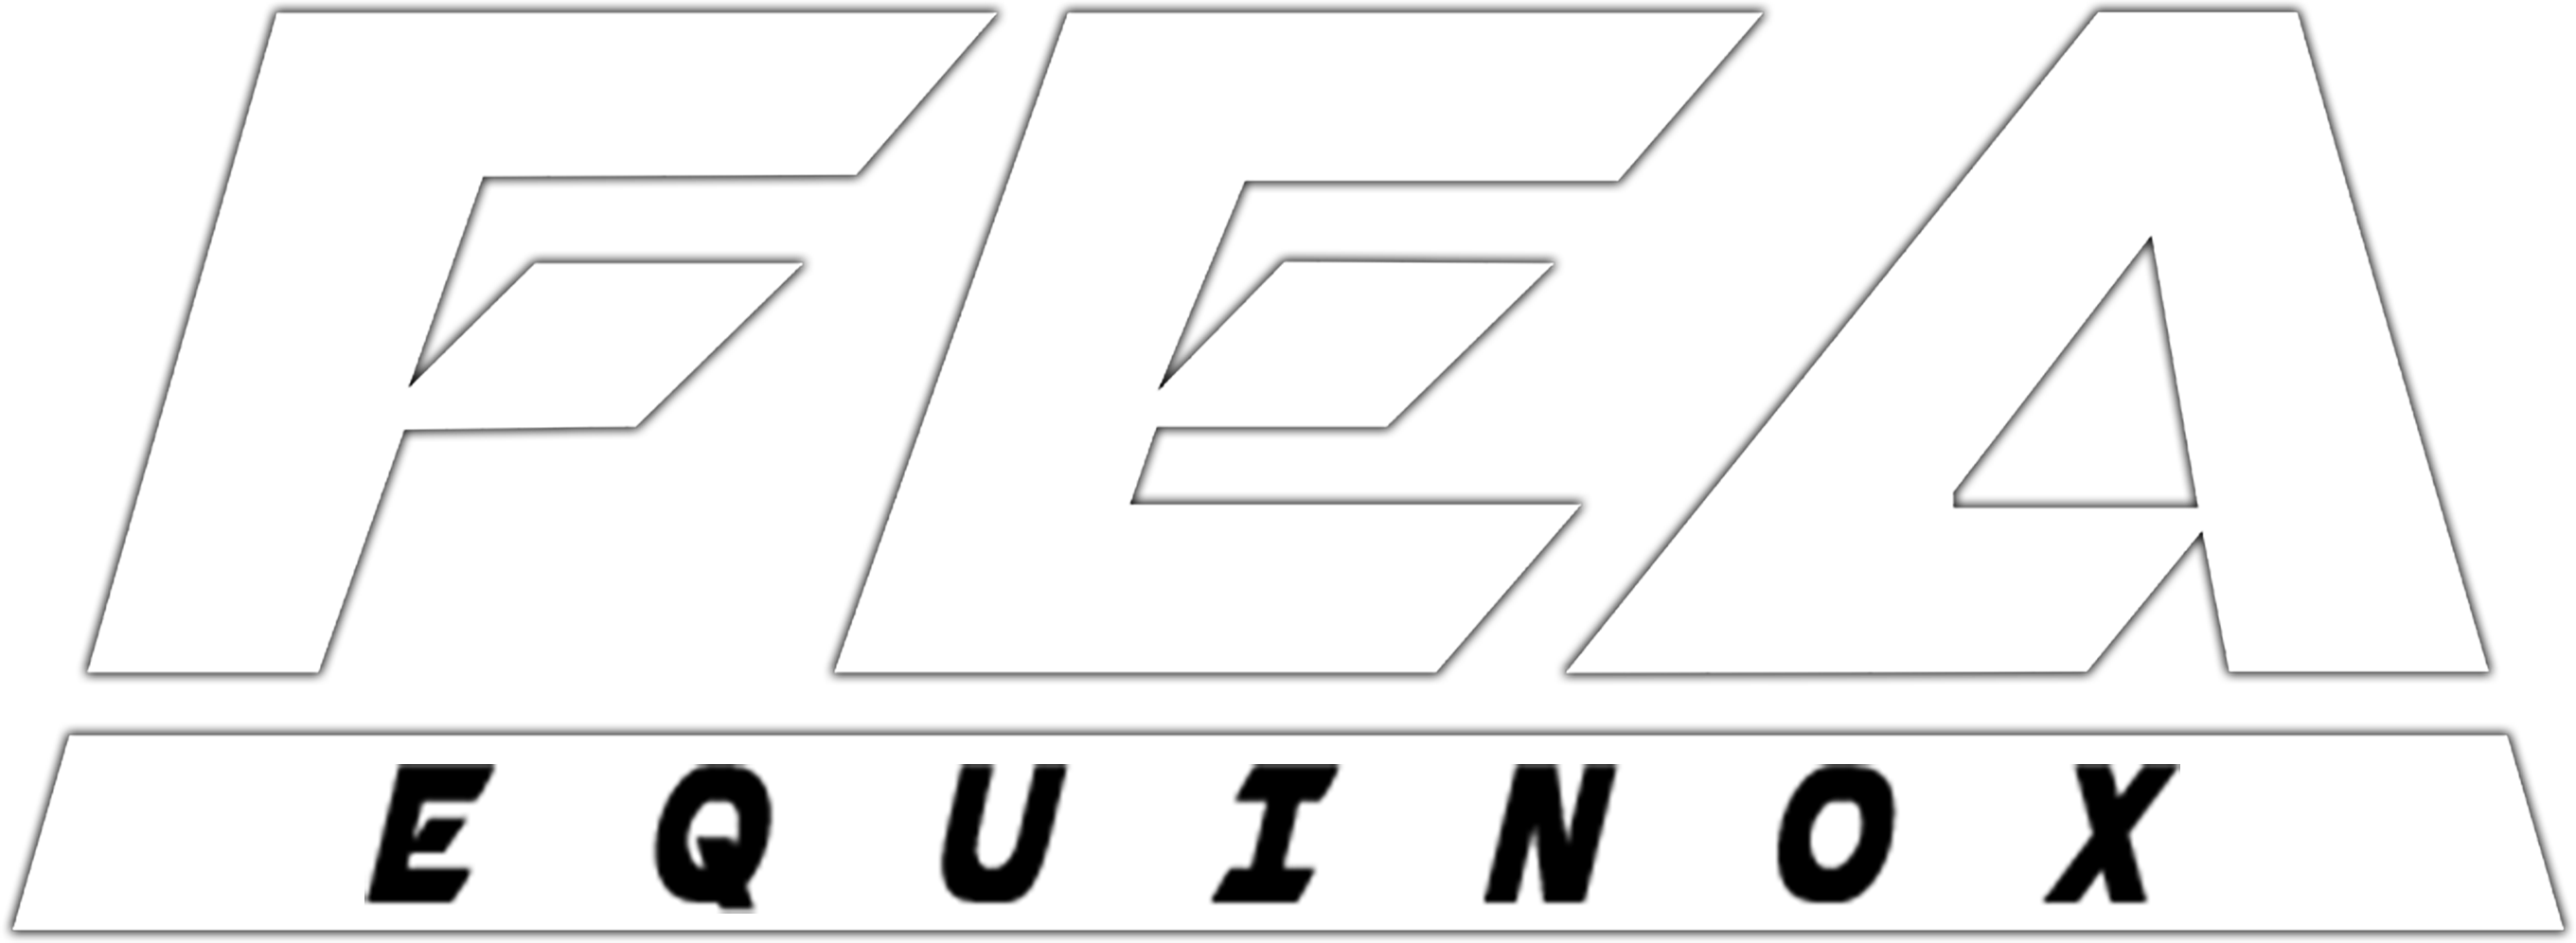 FEA Championship Equinox